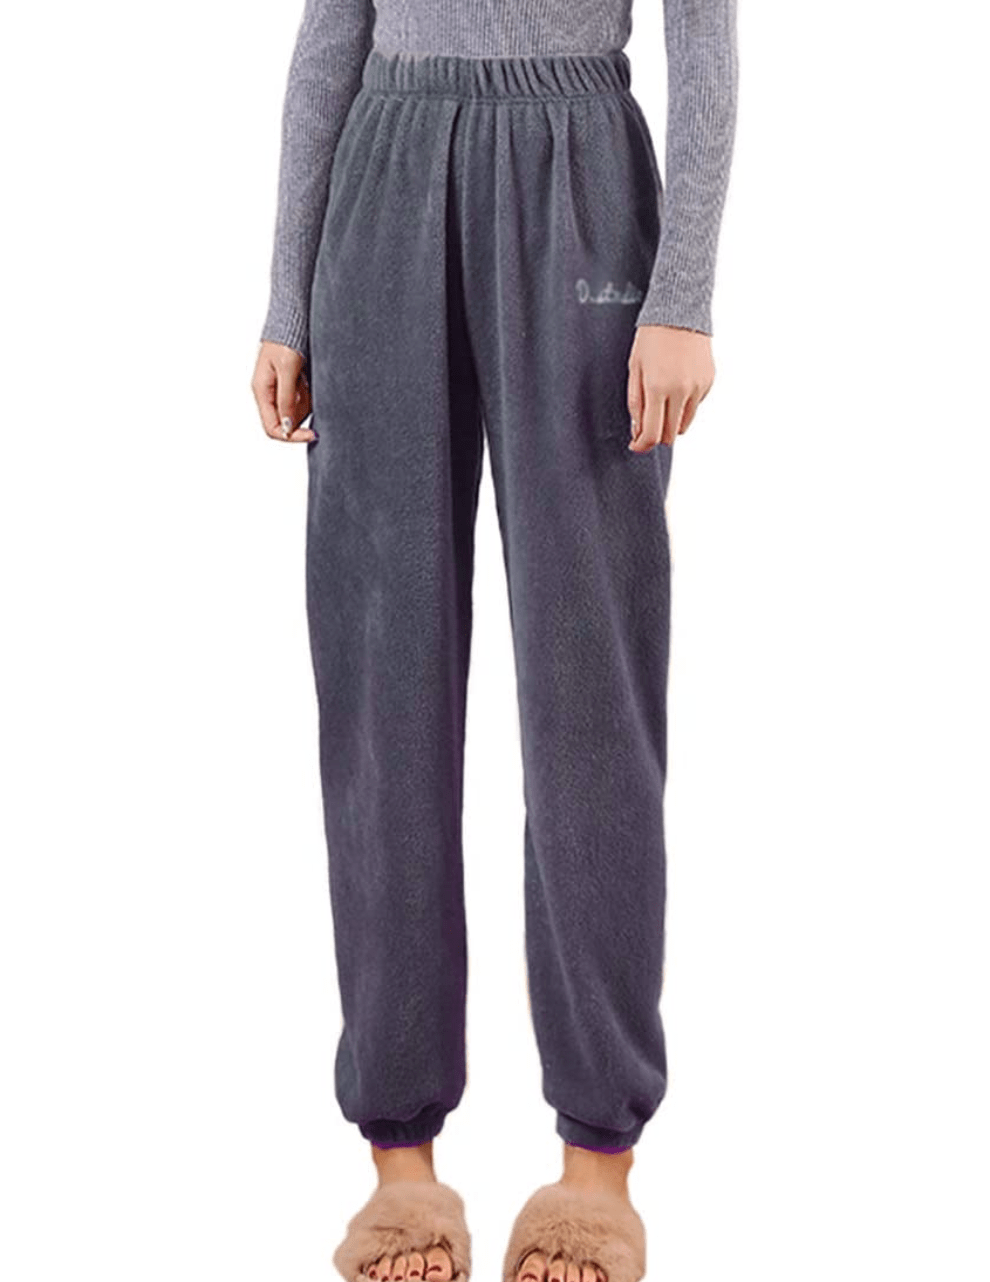 Romastory Women's Winter Thick Pajama Warm Fleece Loungewear Pants